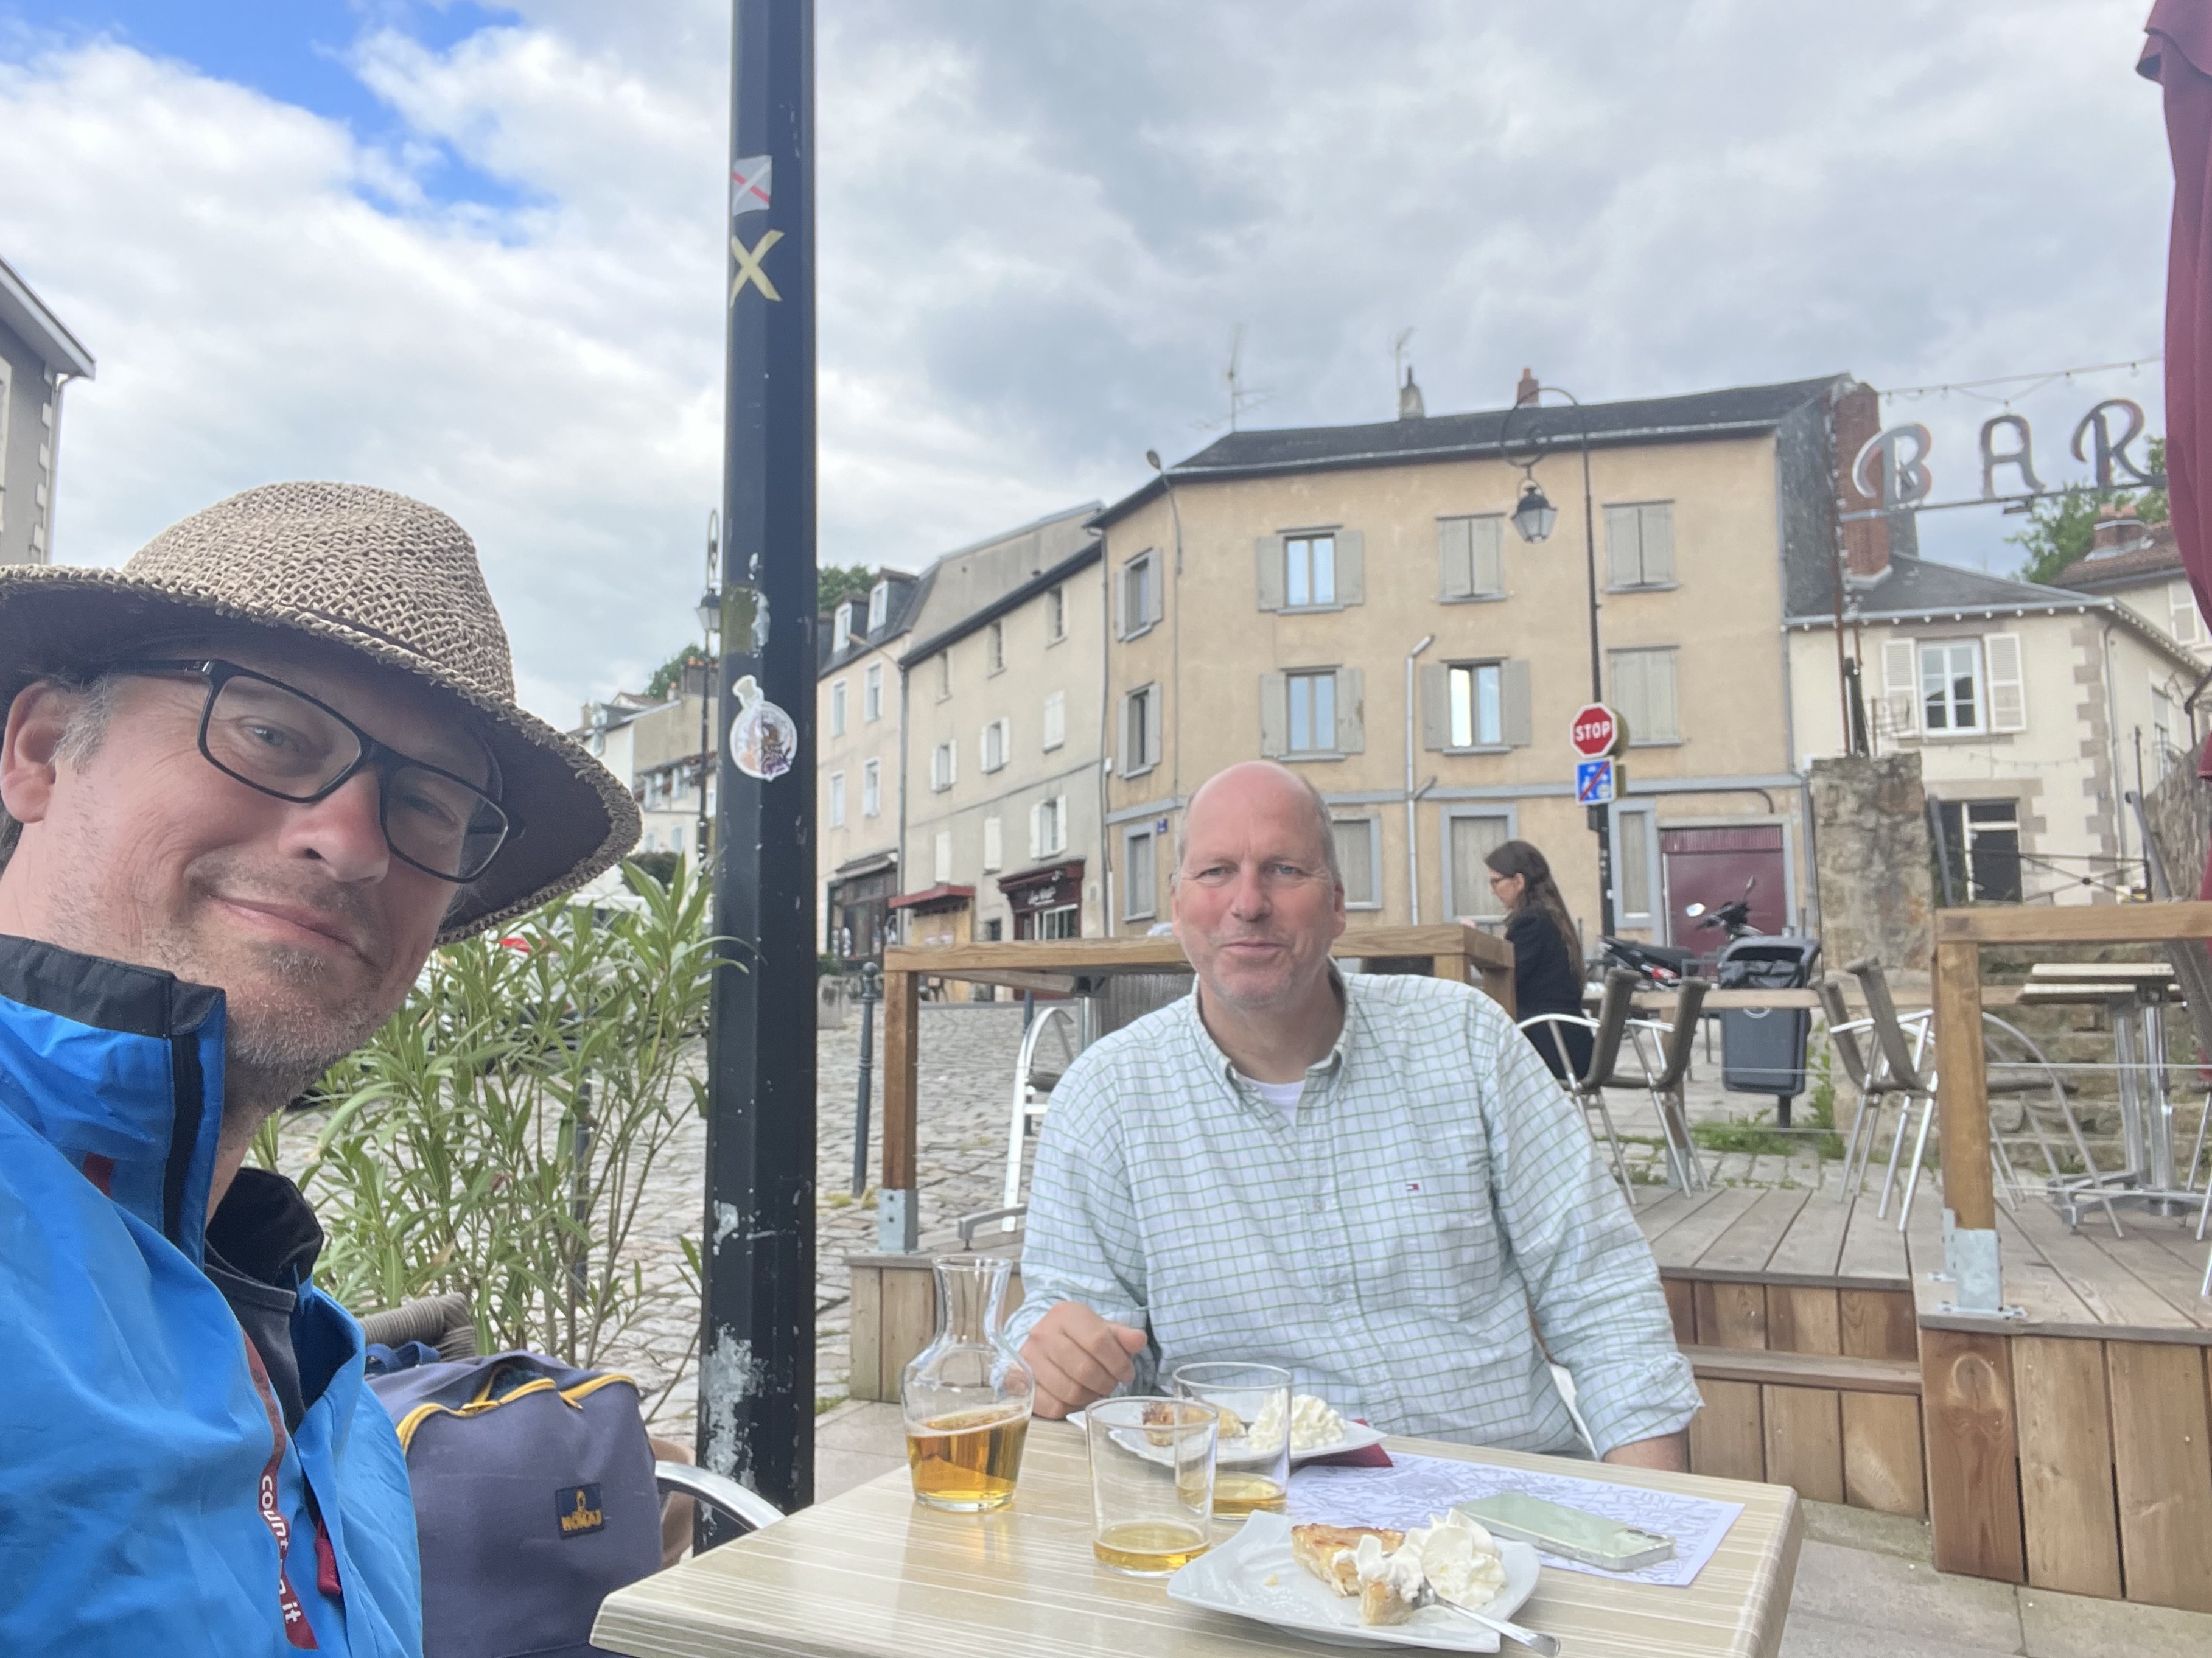 Tussenstop in bar Saint-Jacquues in Limoges